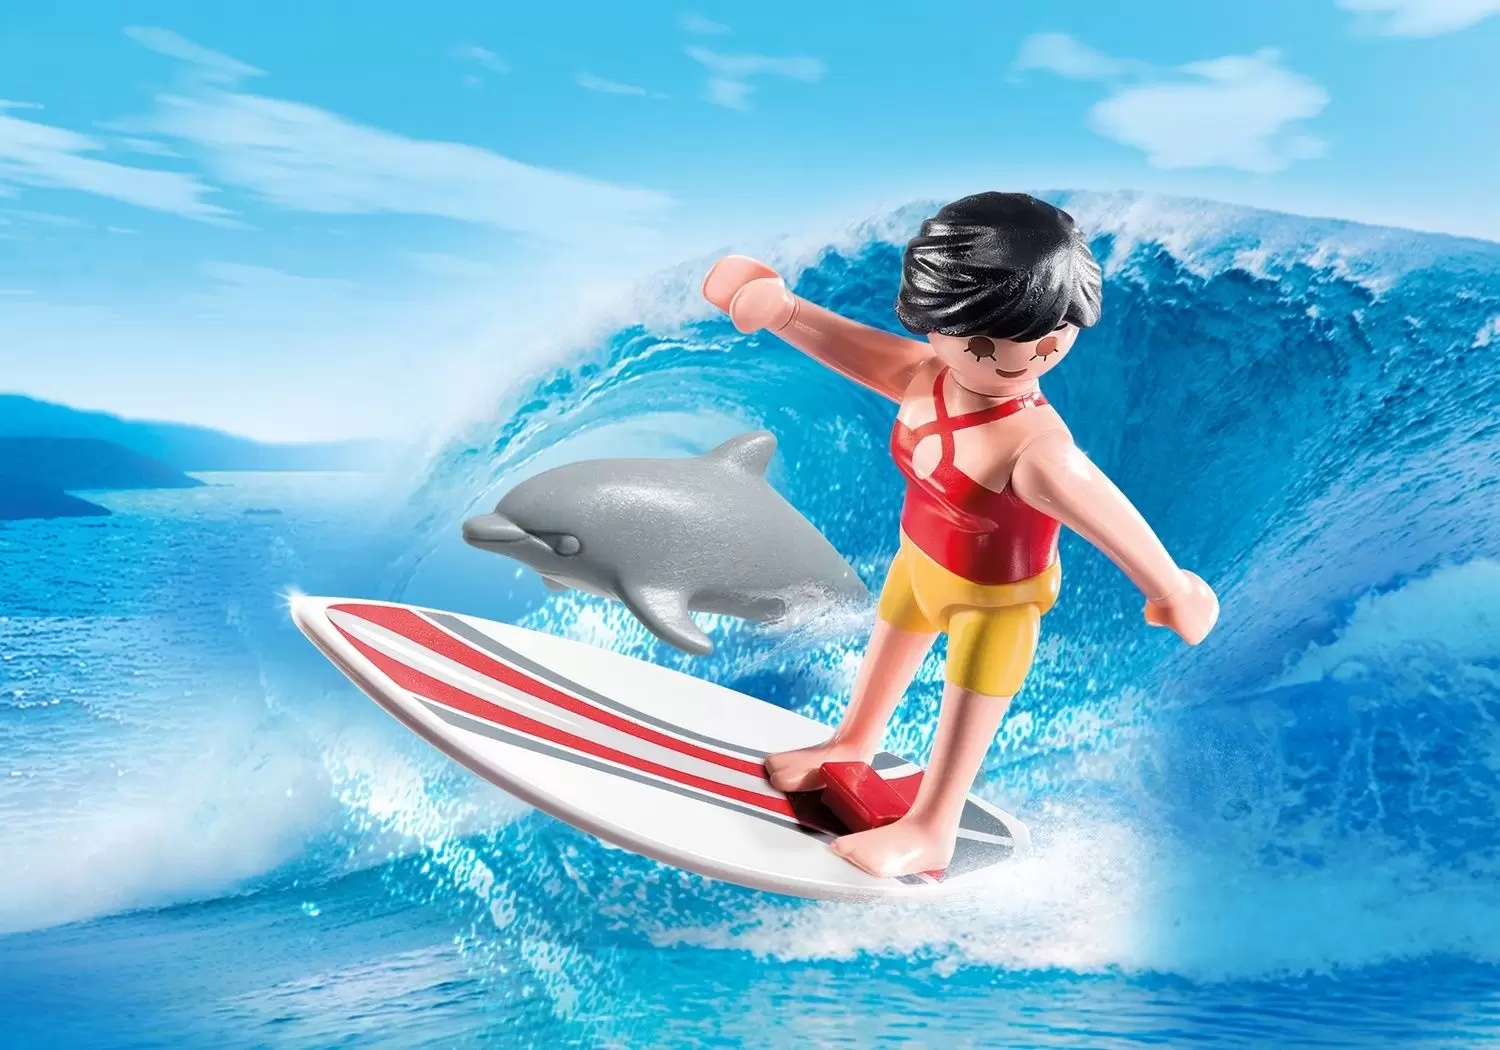 Playmobil SpecialPlus - Surfer